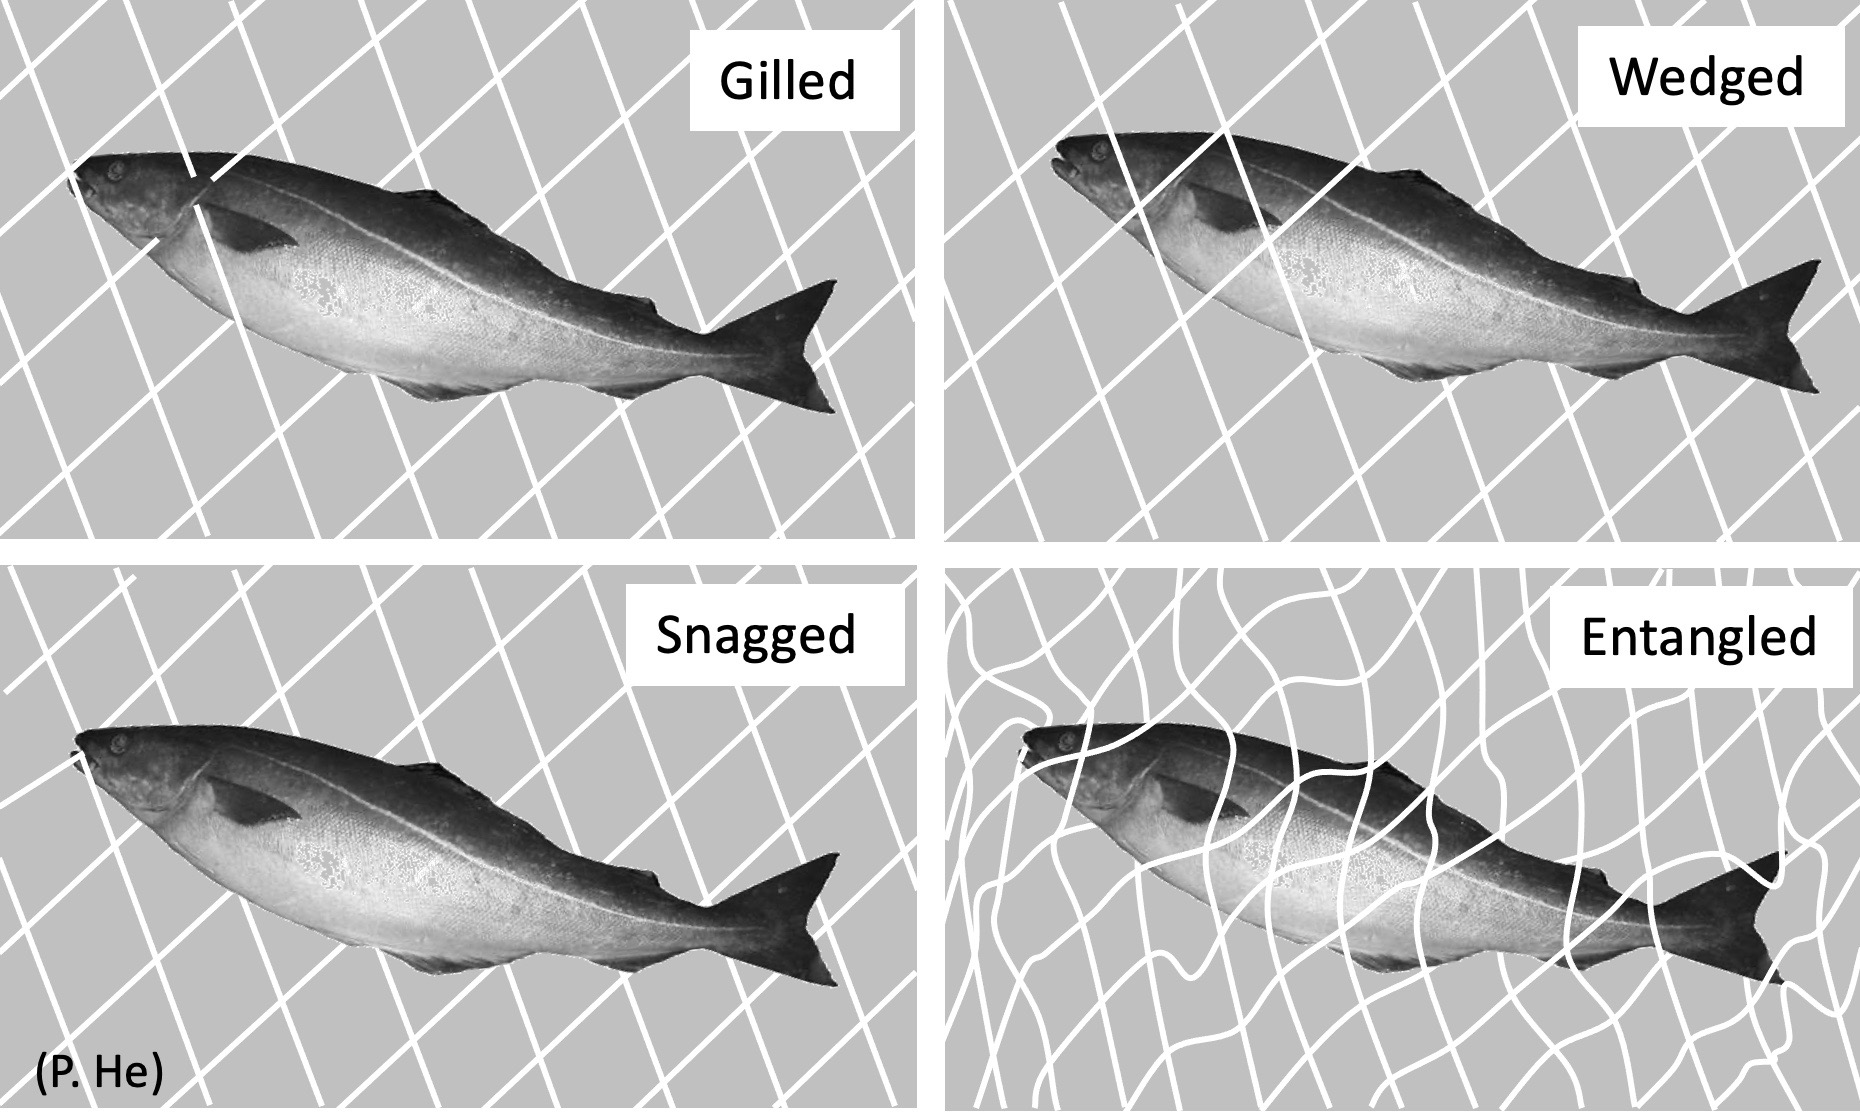 Set gillnets (anchored) - Fishing gear type